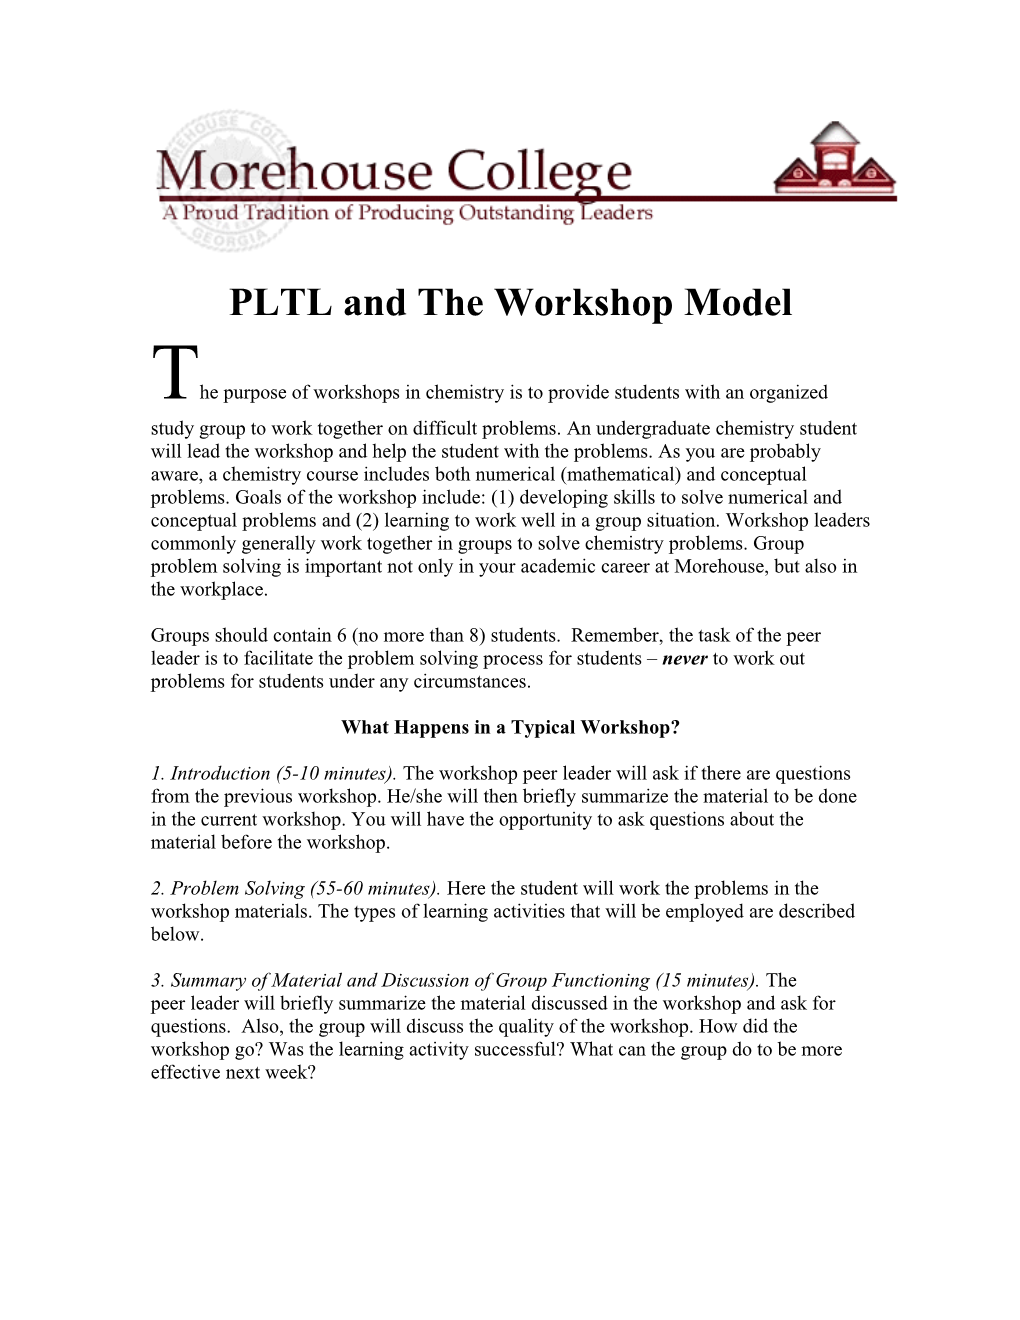 PLTL and Morehouse